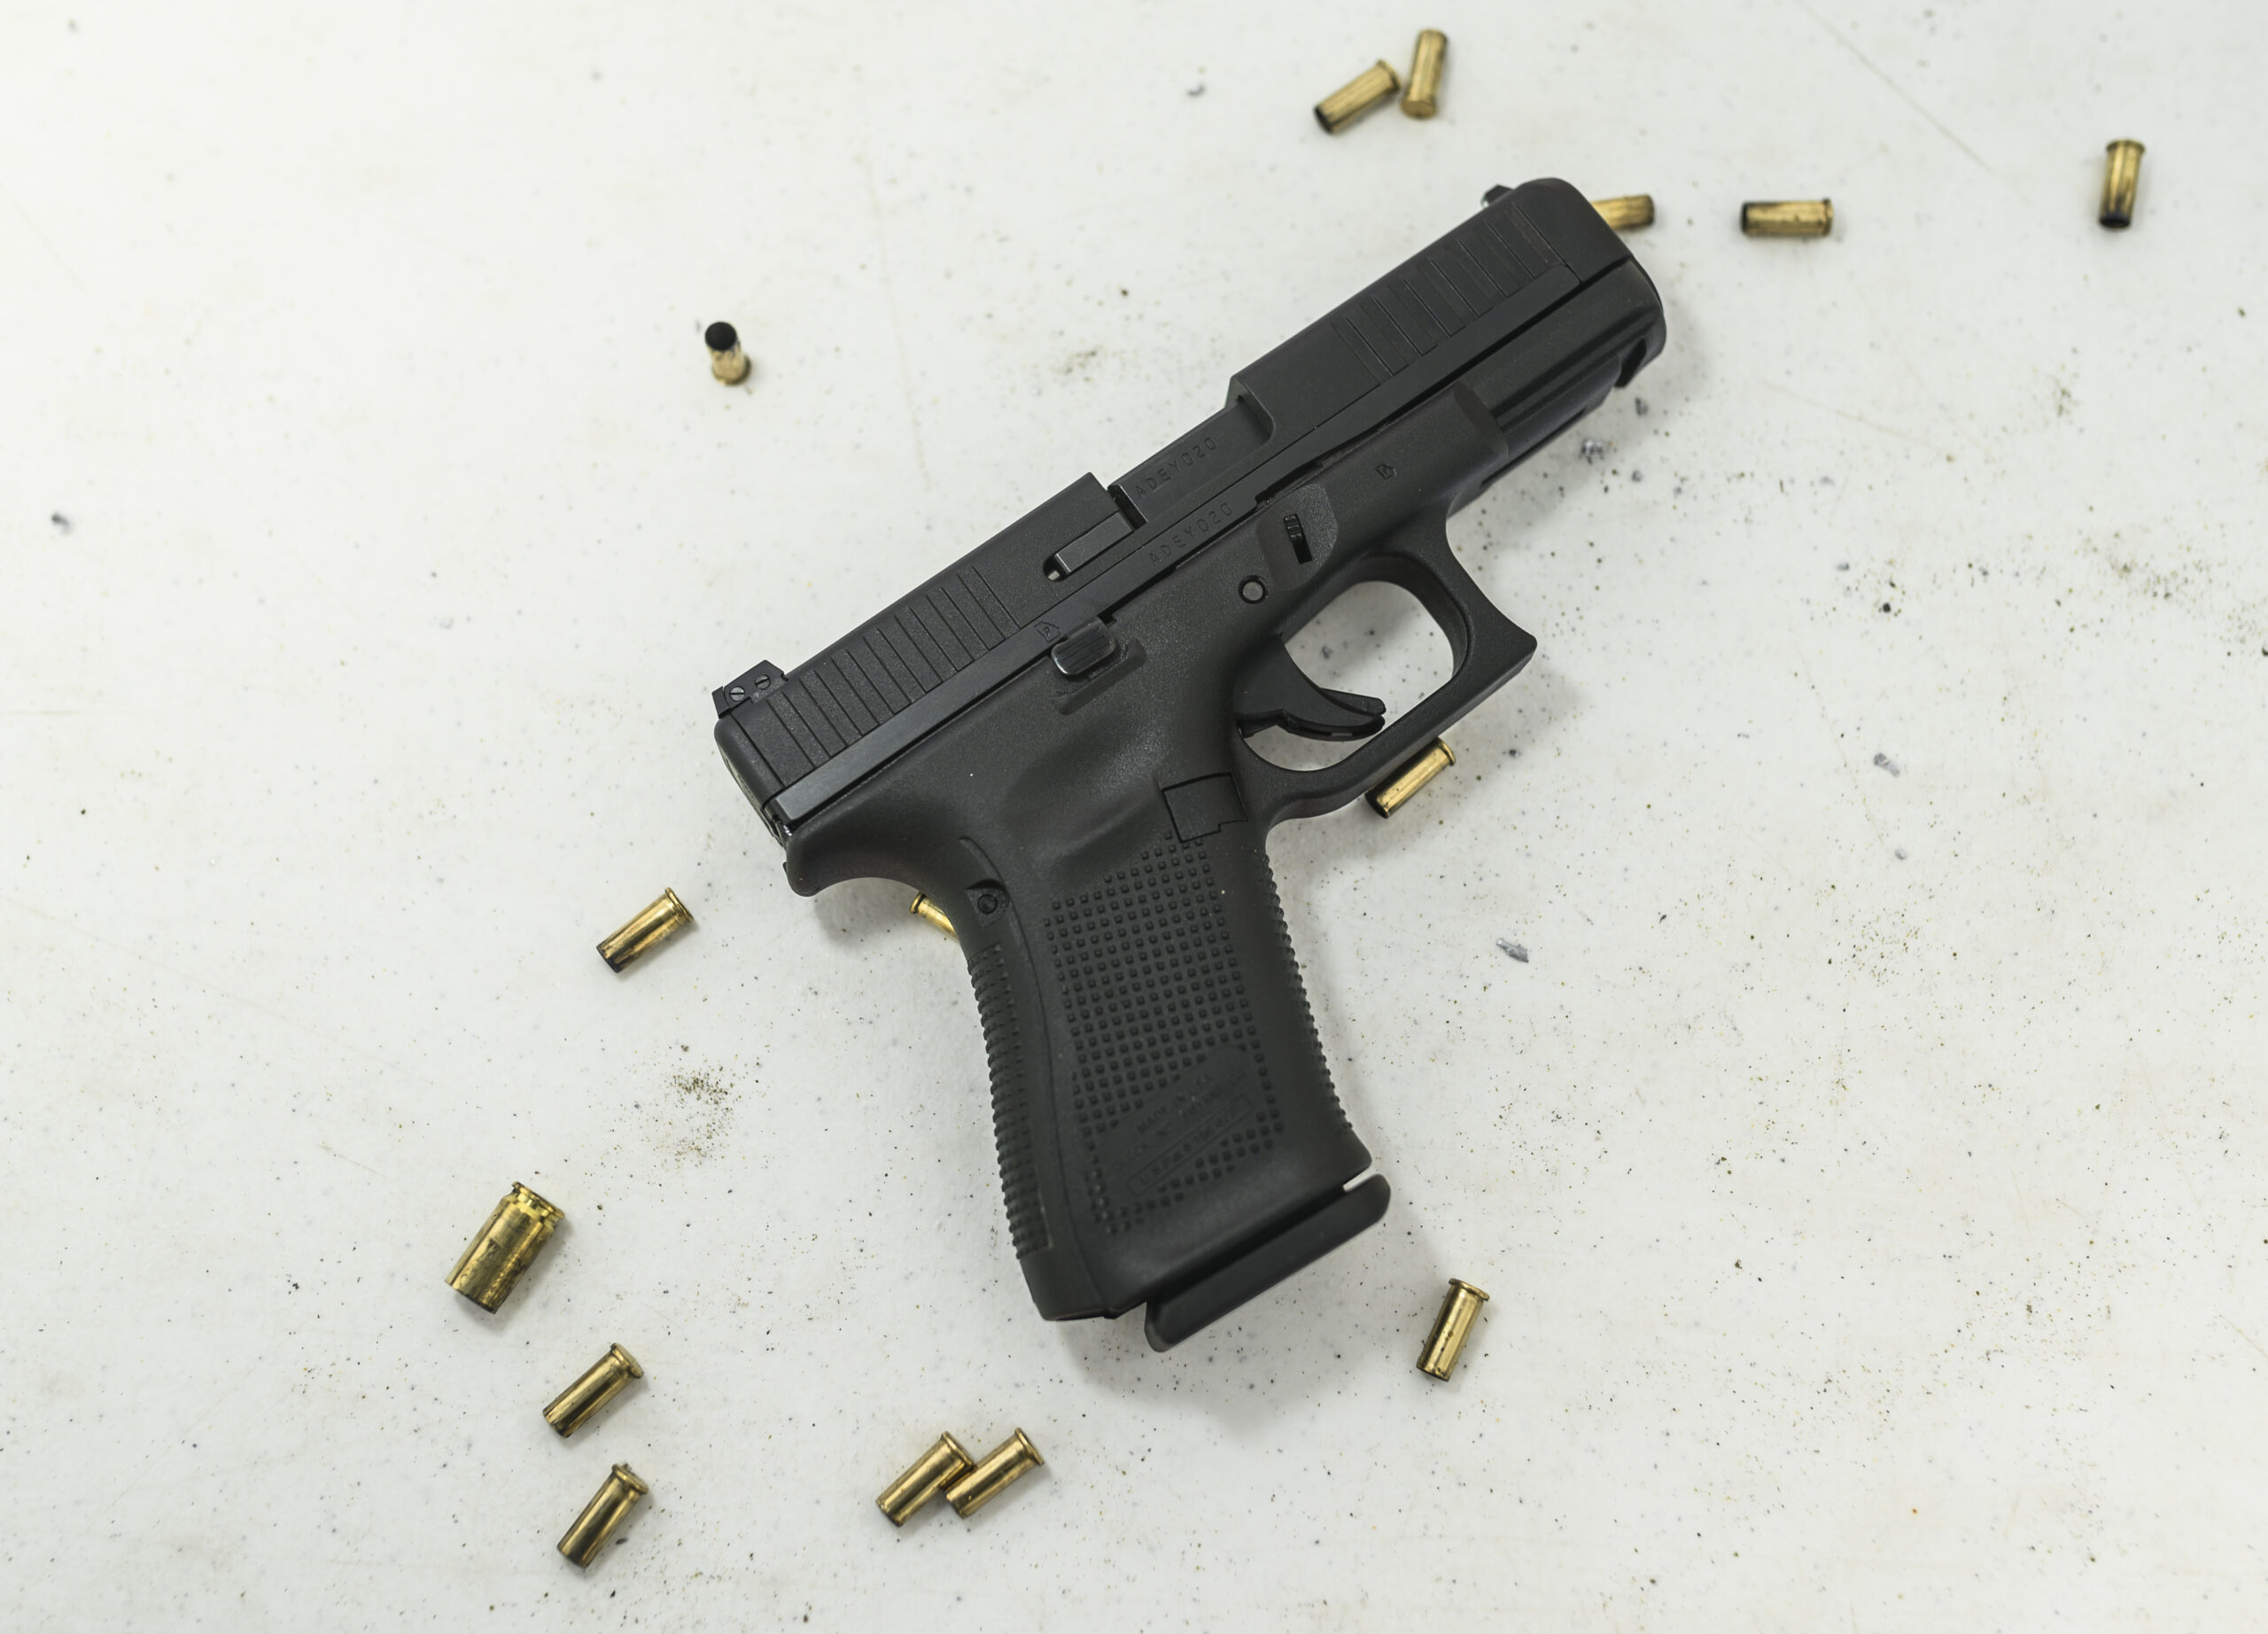 Glock G44 handgun on a white background with empty rimfire cartridge cases scattered around it